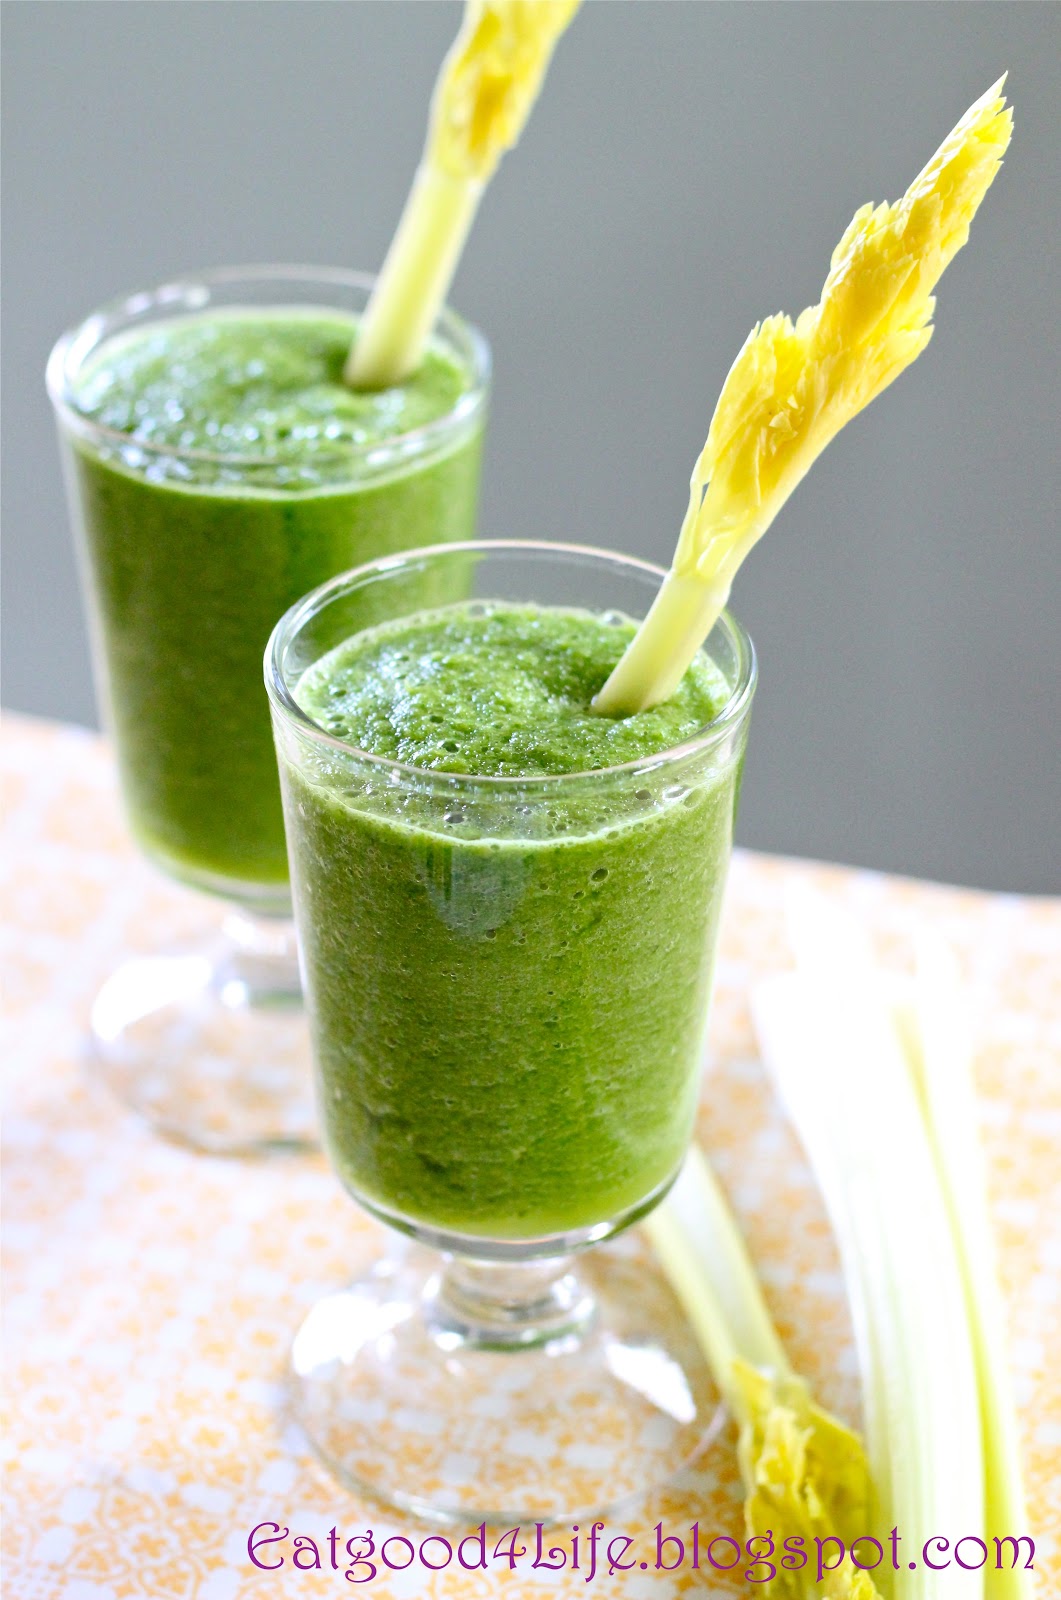 Dr. Oz's Green Drink, WW Juice Recipes